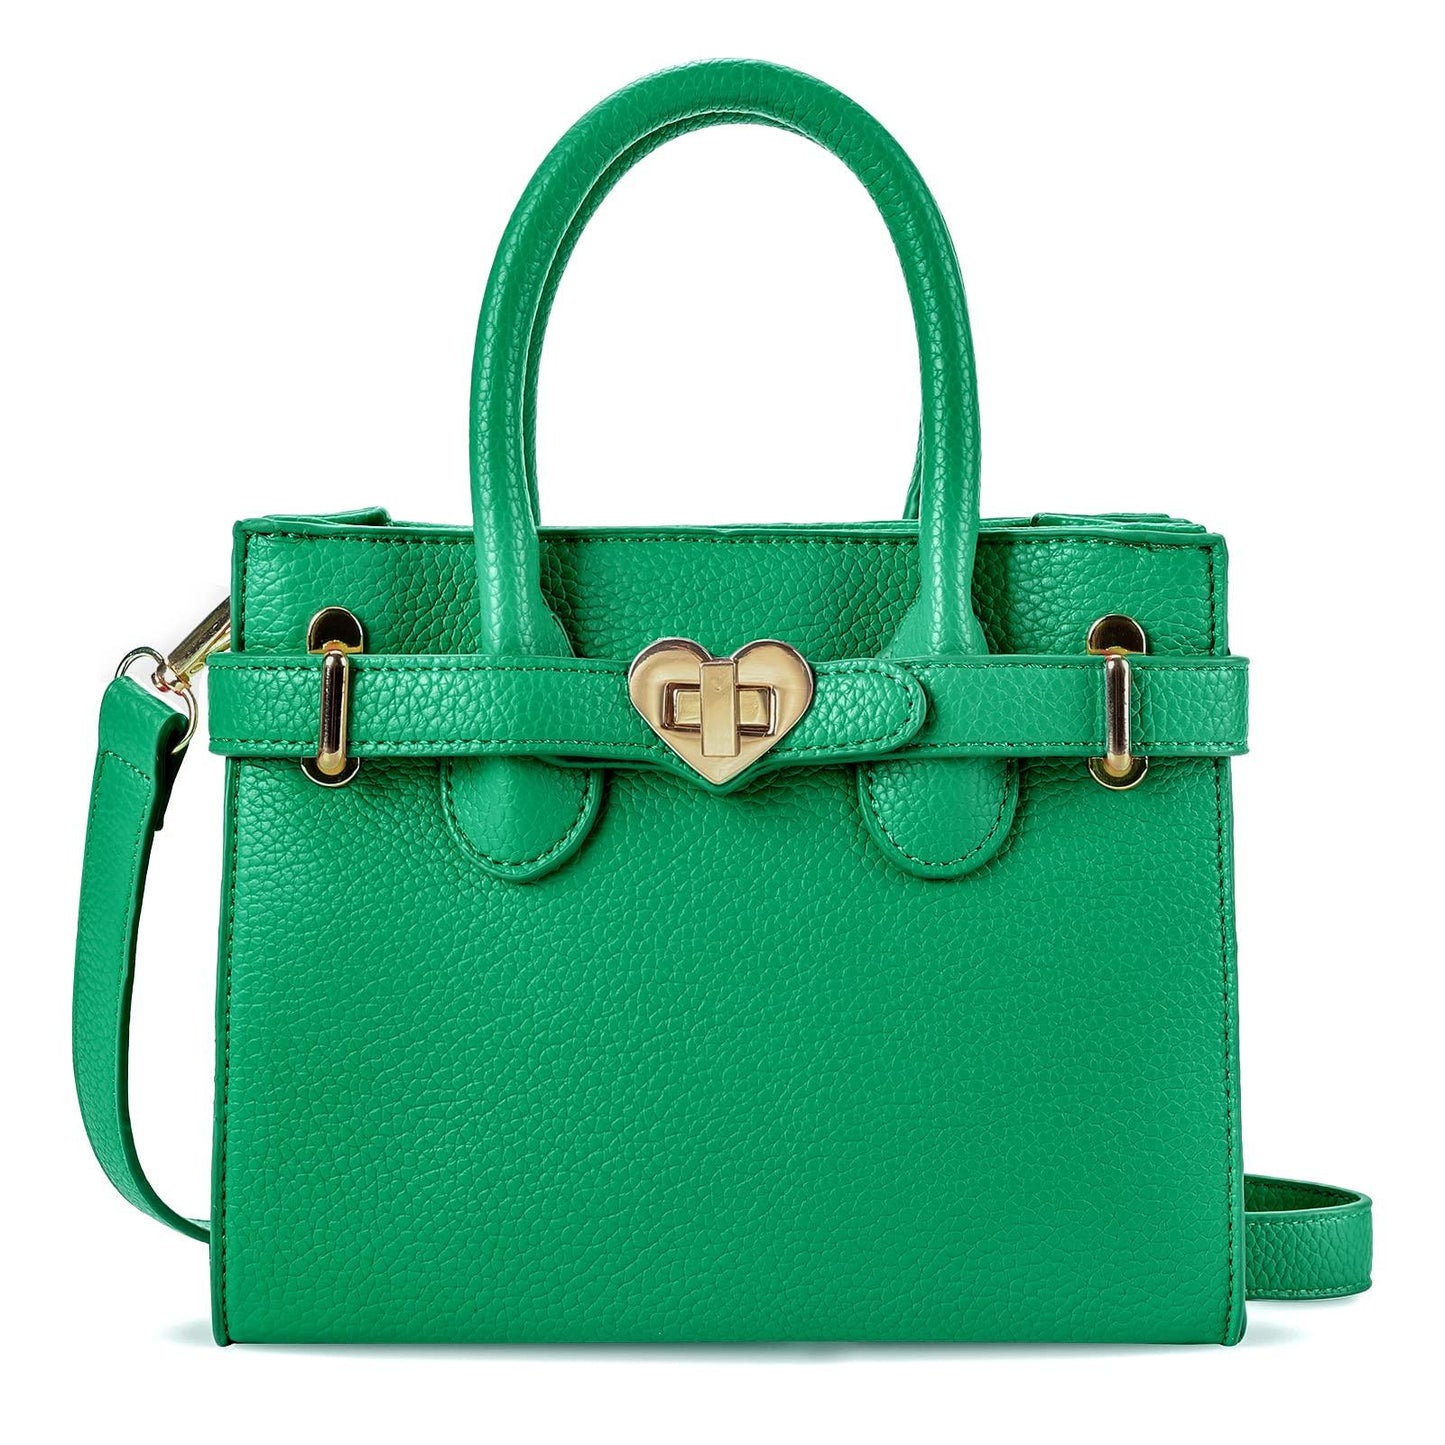 Miss Classy Handbag Mibasies Green 